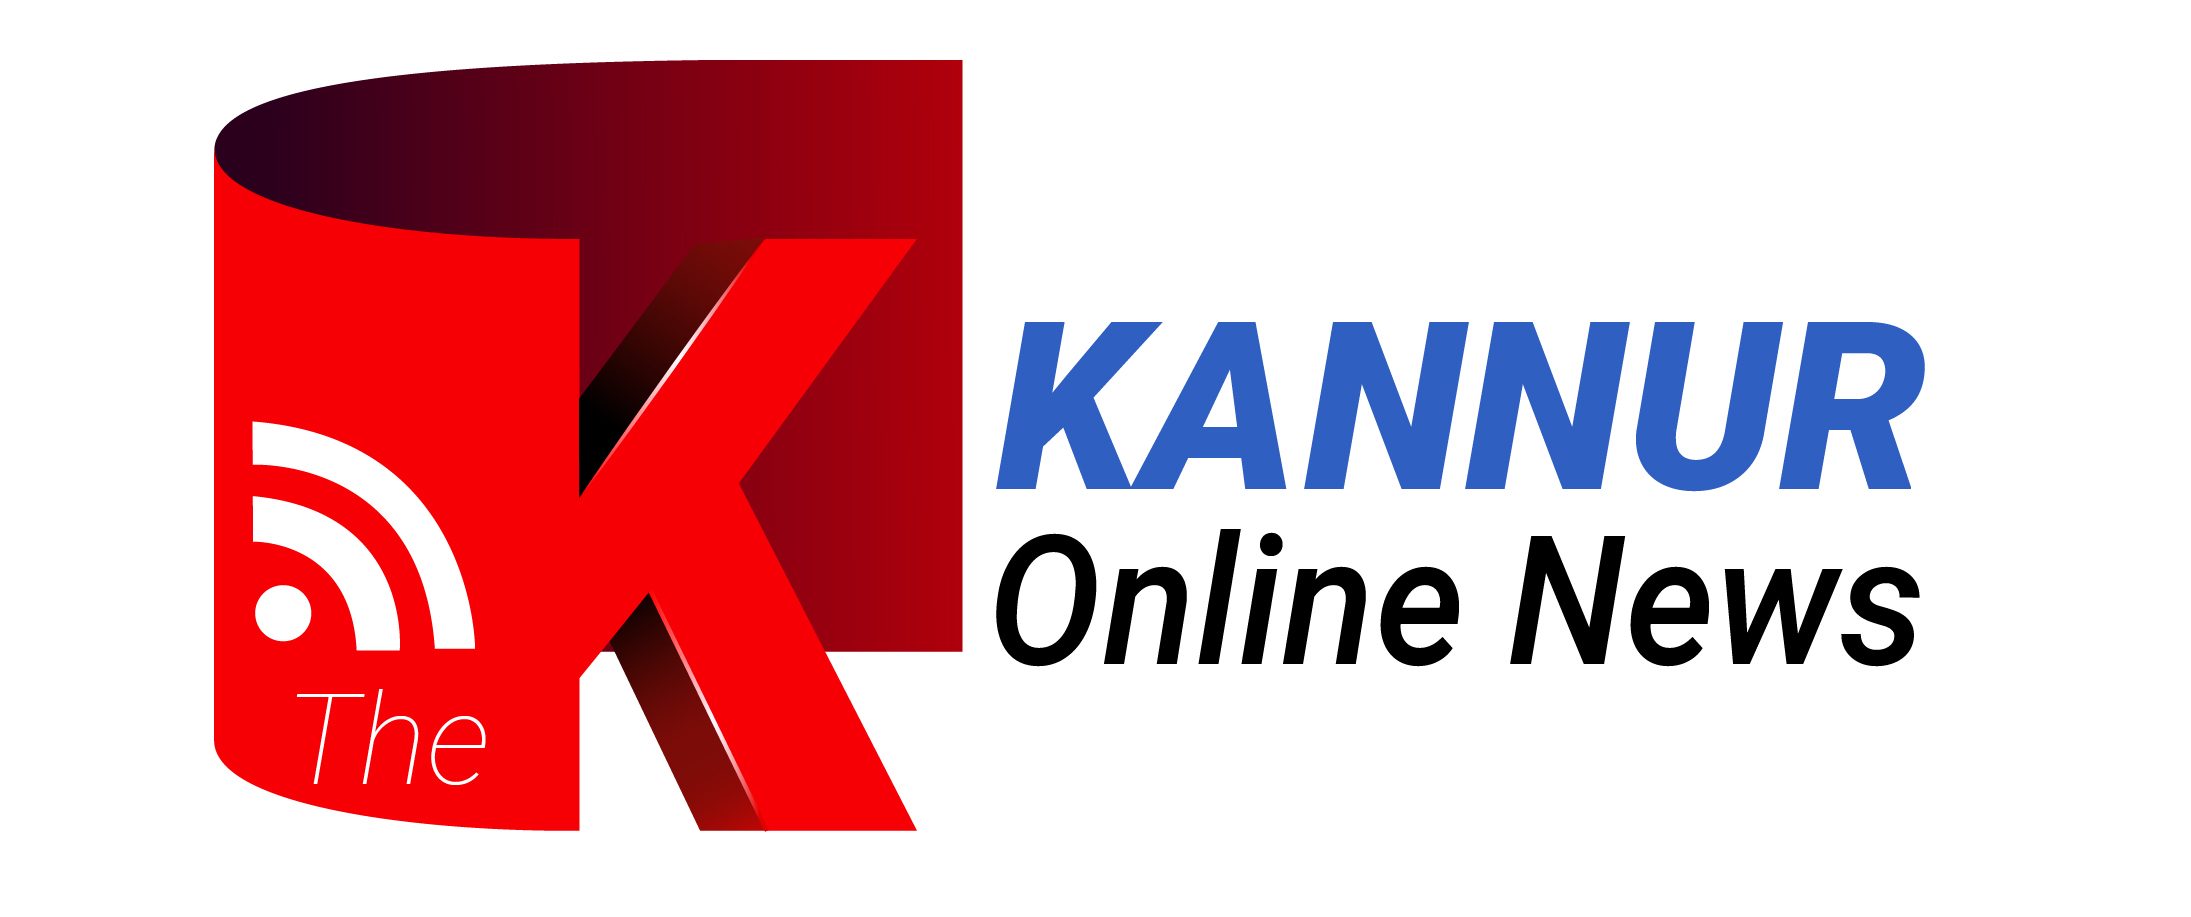 Kannur Online News